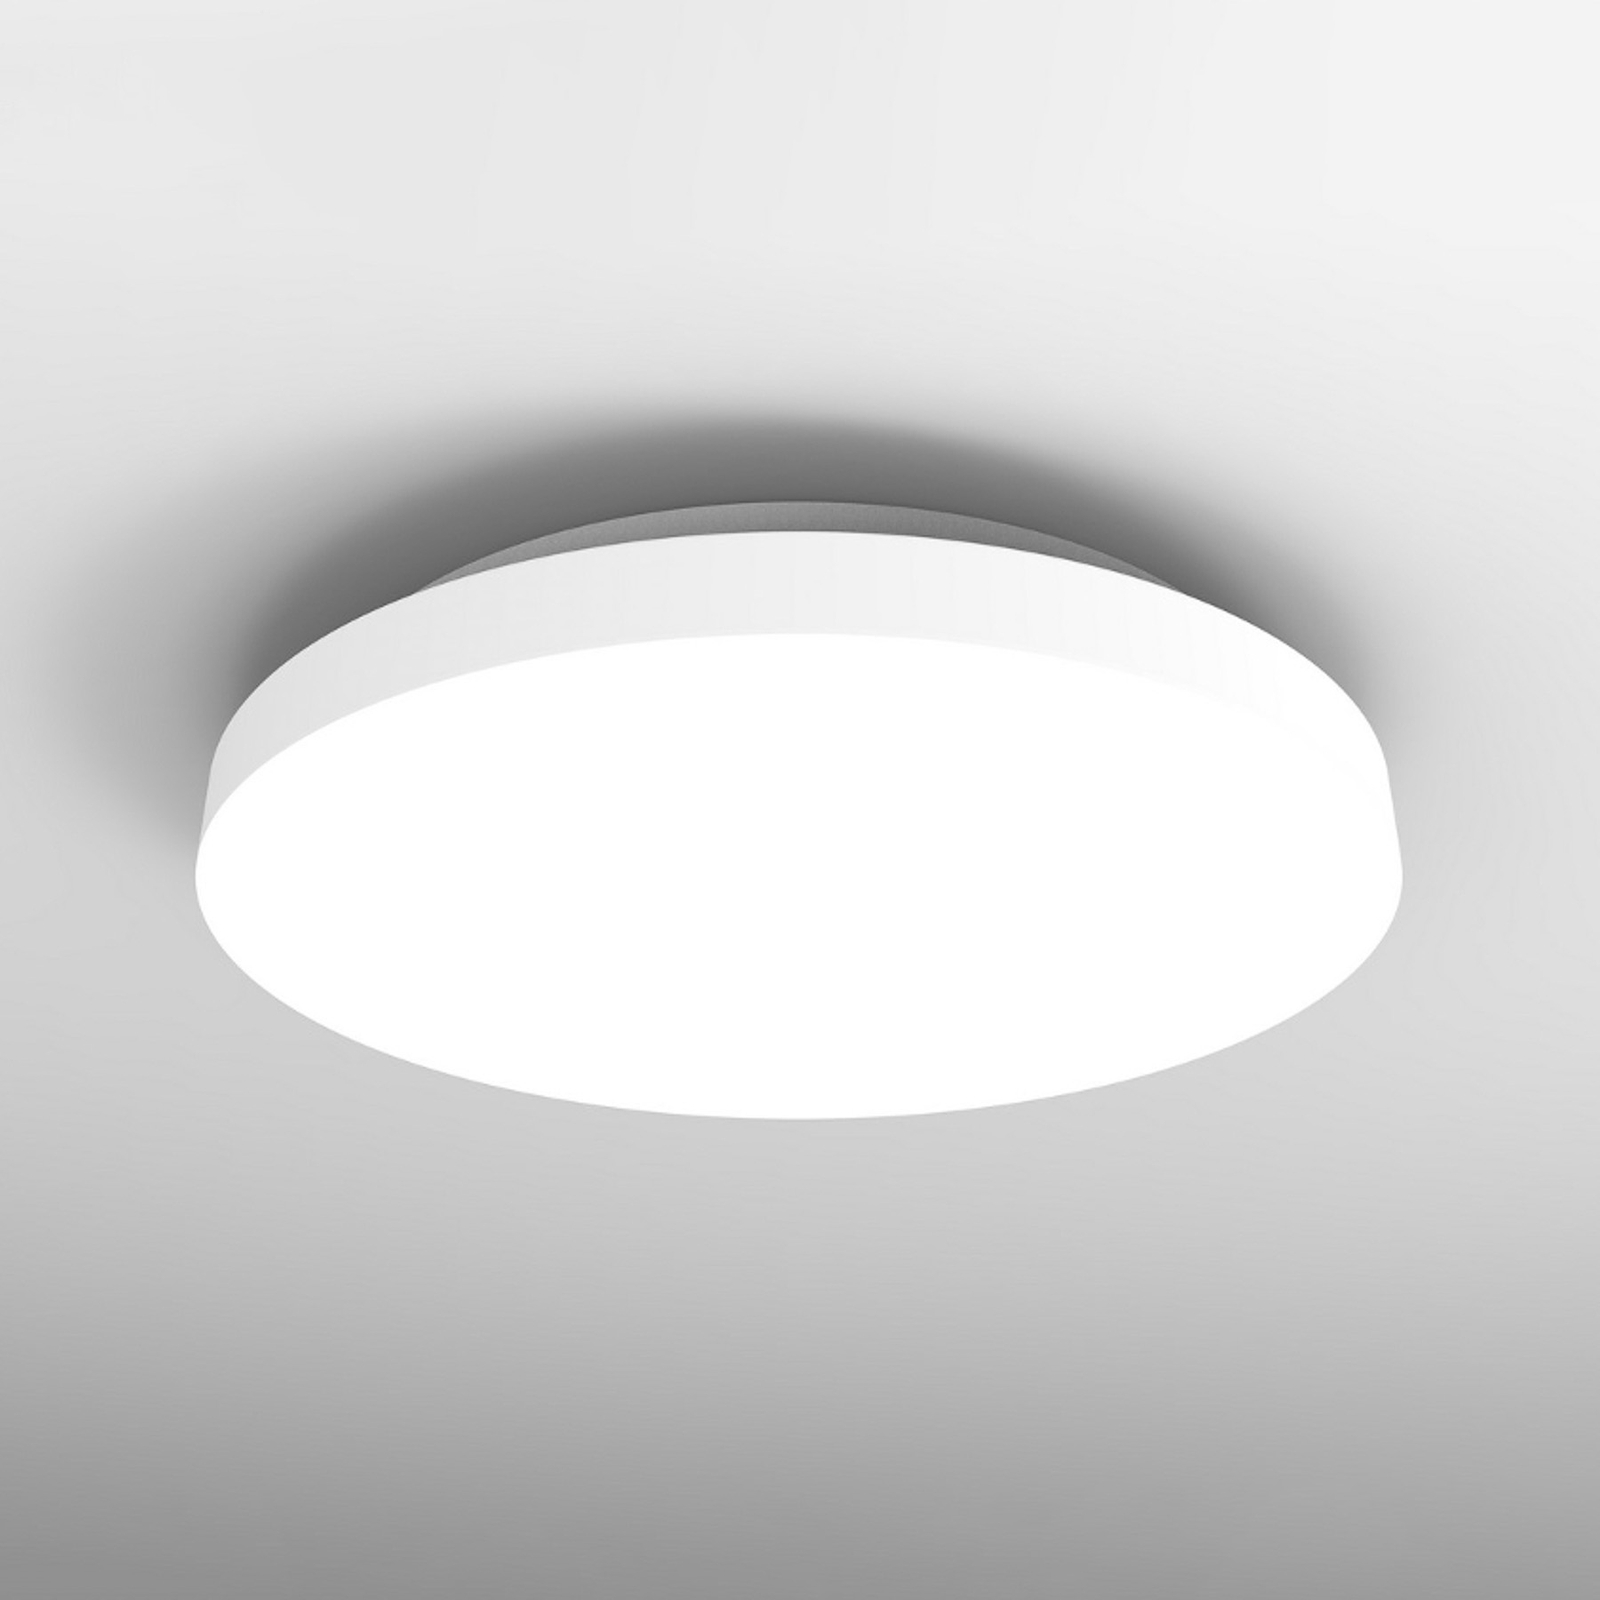 LED ceiling light Allrounder 1, adjustable light colour